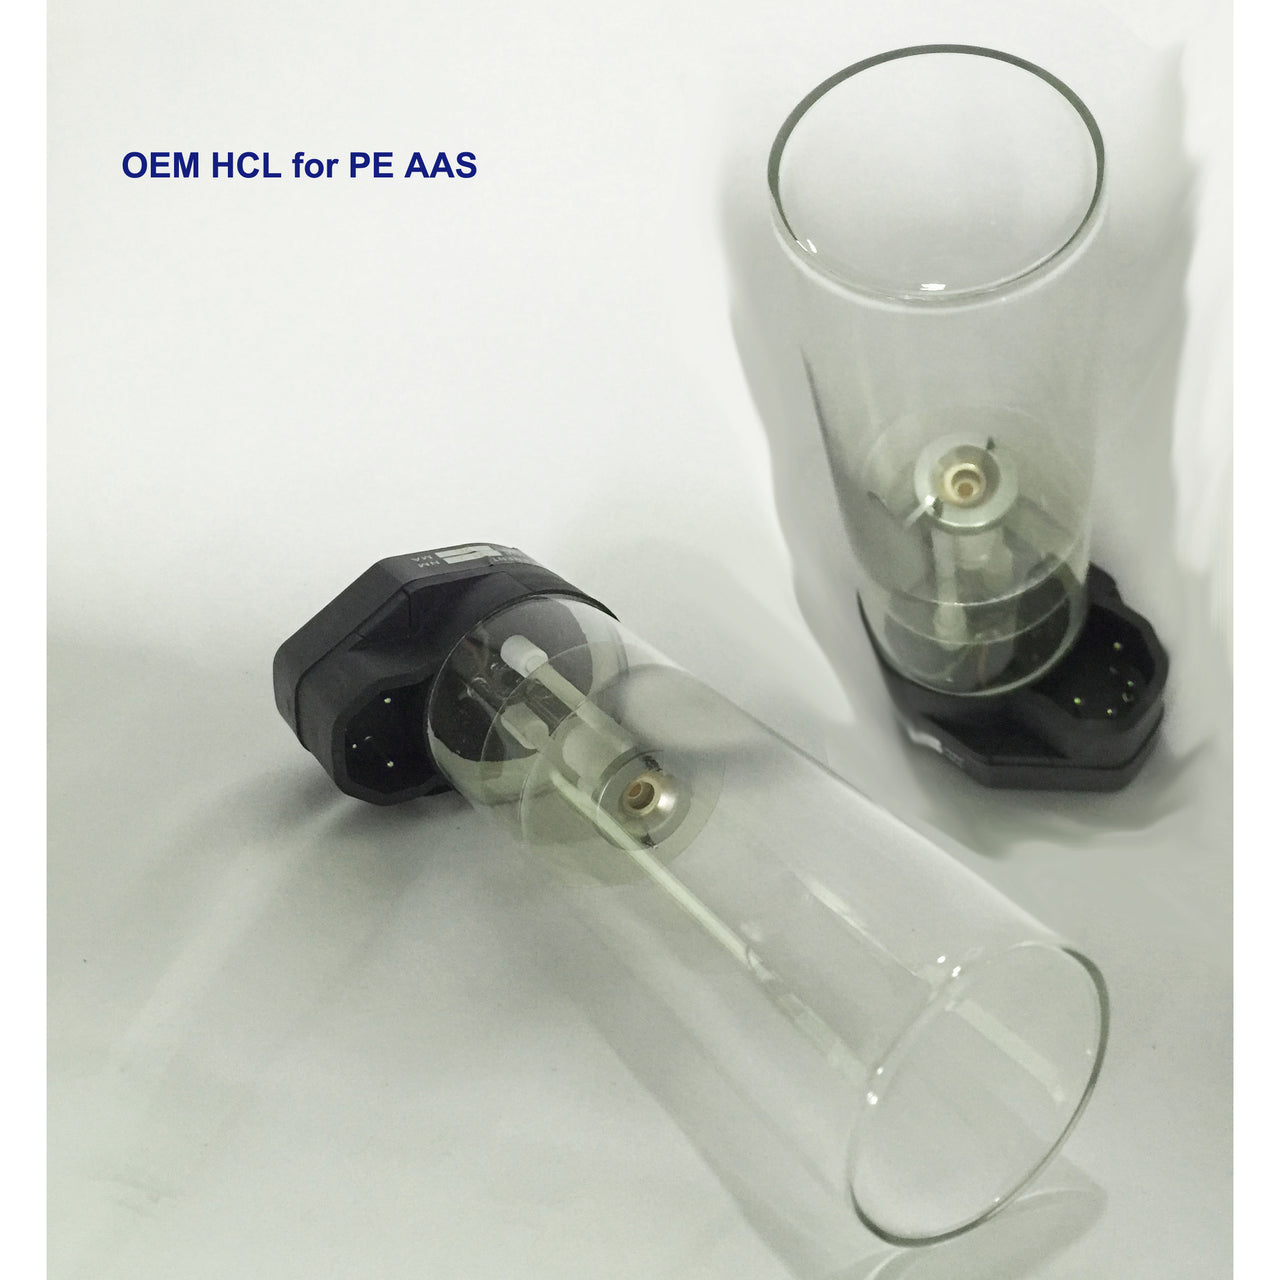 Hollow Cathode Lamp, Barium - Ba